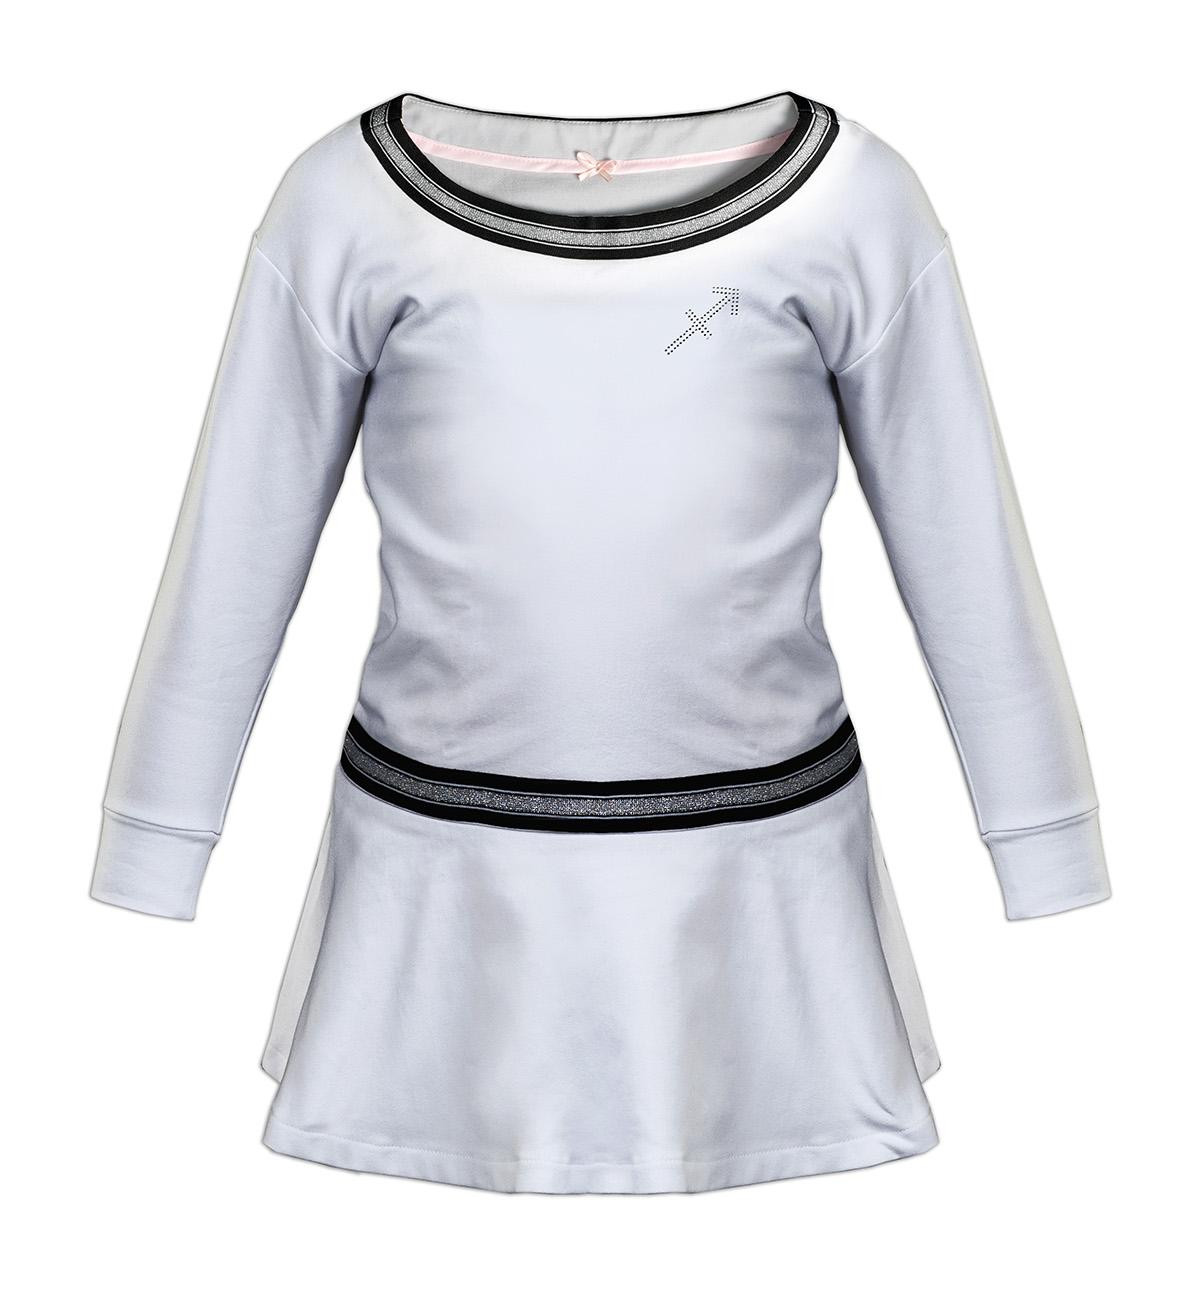 Peplum kid’s blouse with transfer rhinestones (ANGIE) - white 98-104 - sewing set